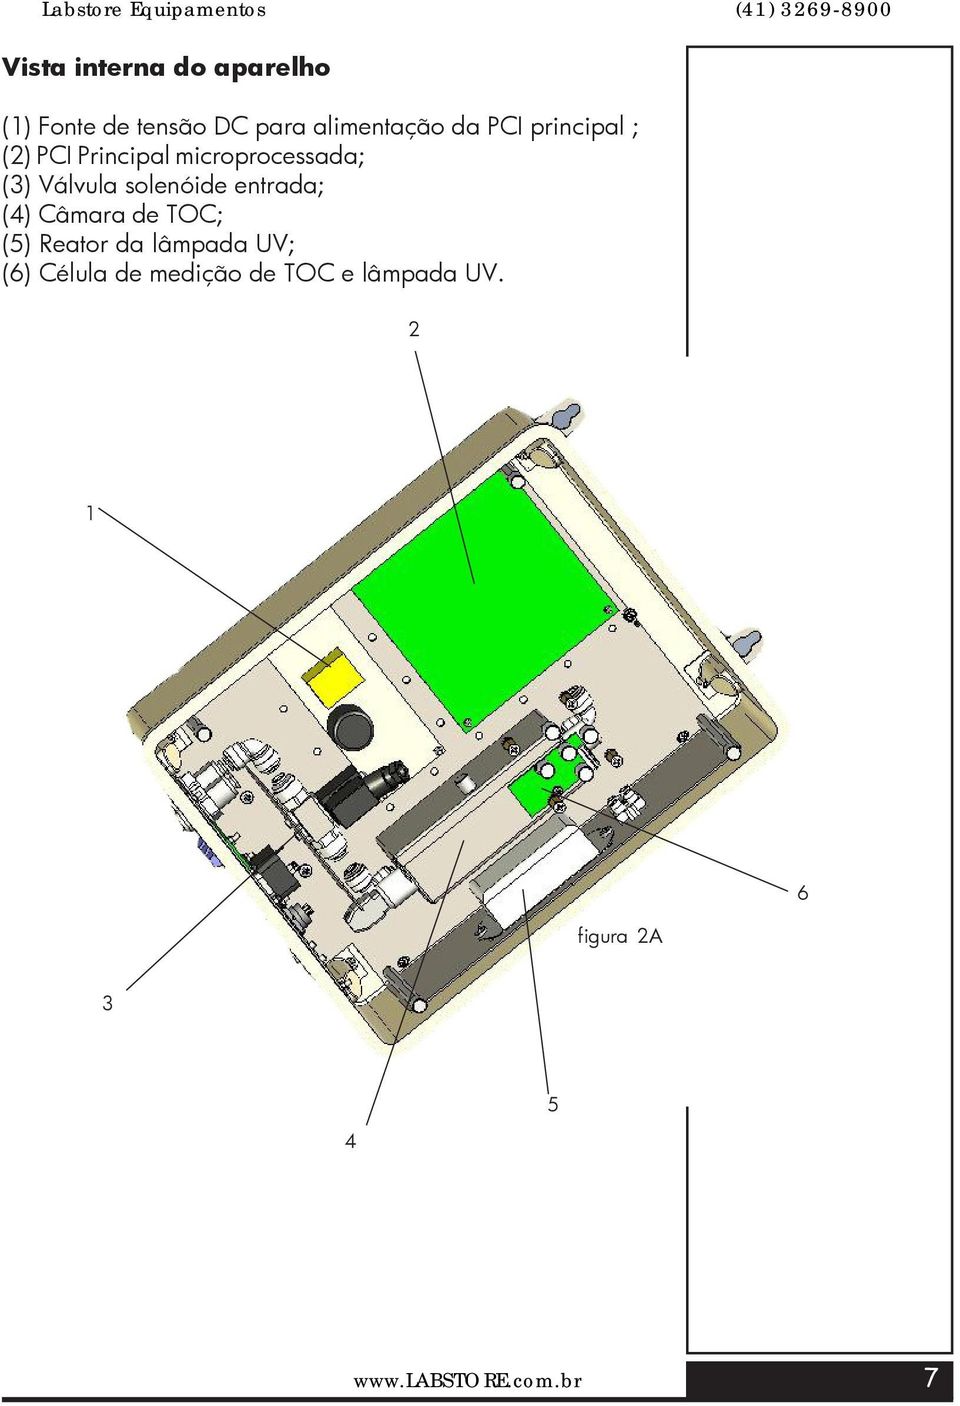 solenóide entrada; (4) Câmara de TOC; (5) Reator da lâmpada UV;